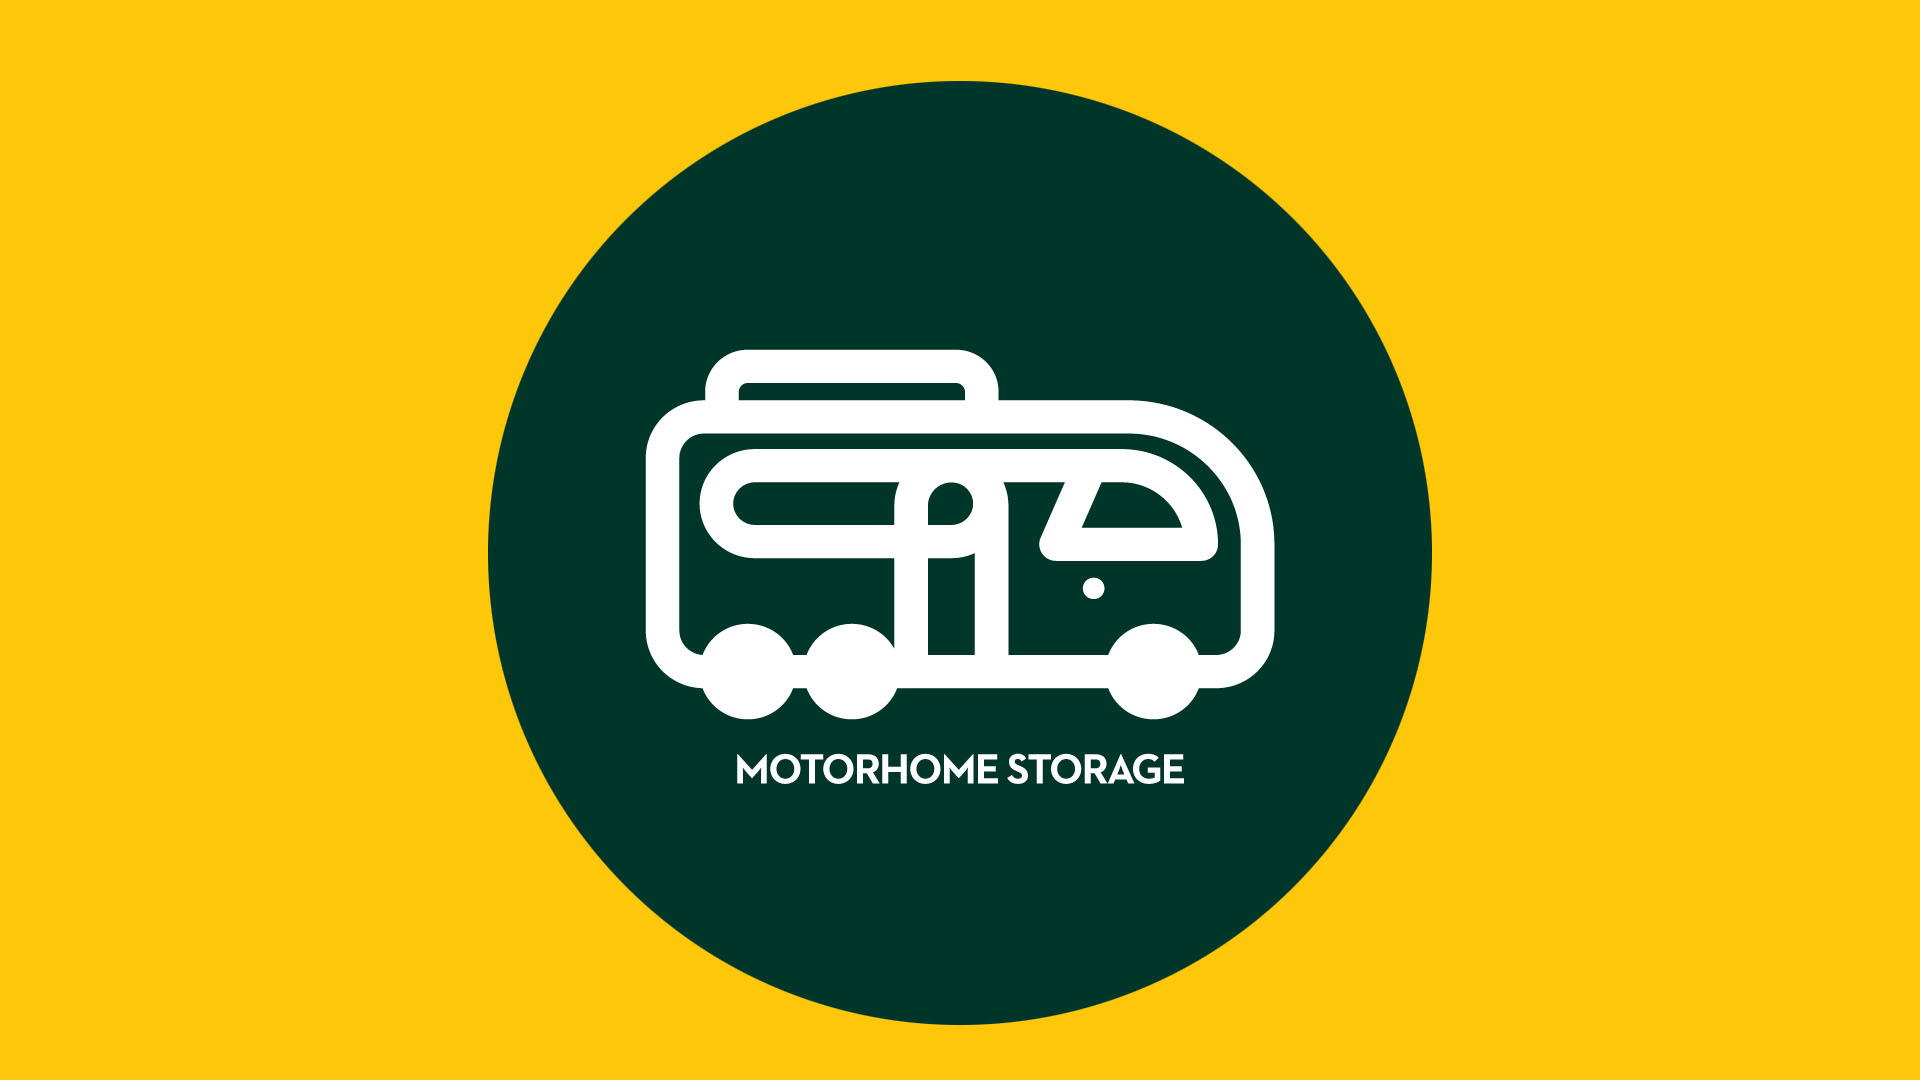 Motorhome Storage - Secure Self Storage, Cramlington, Northumberland 01